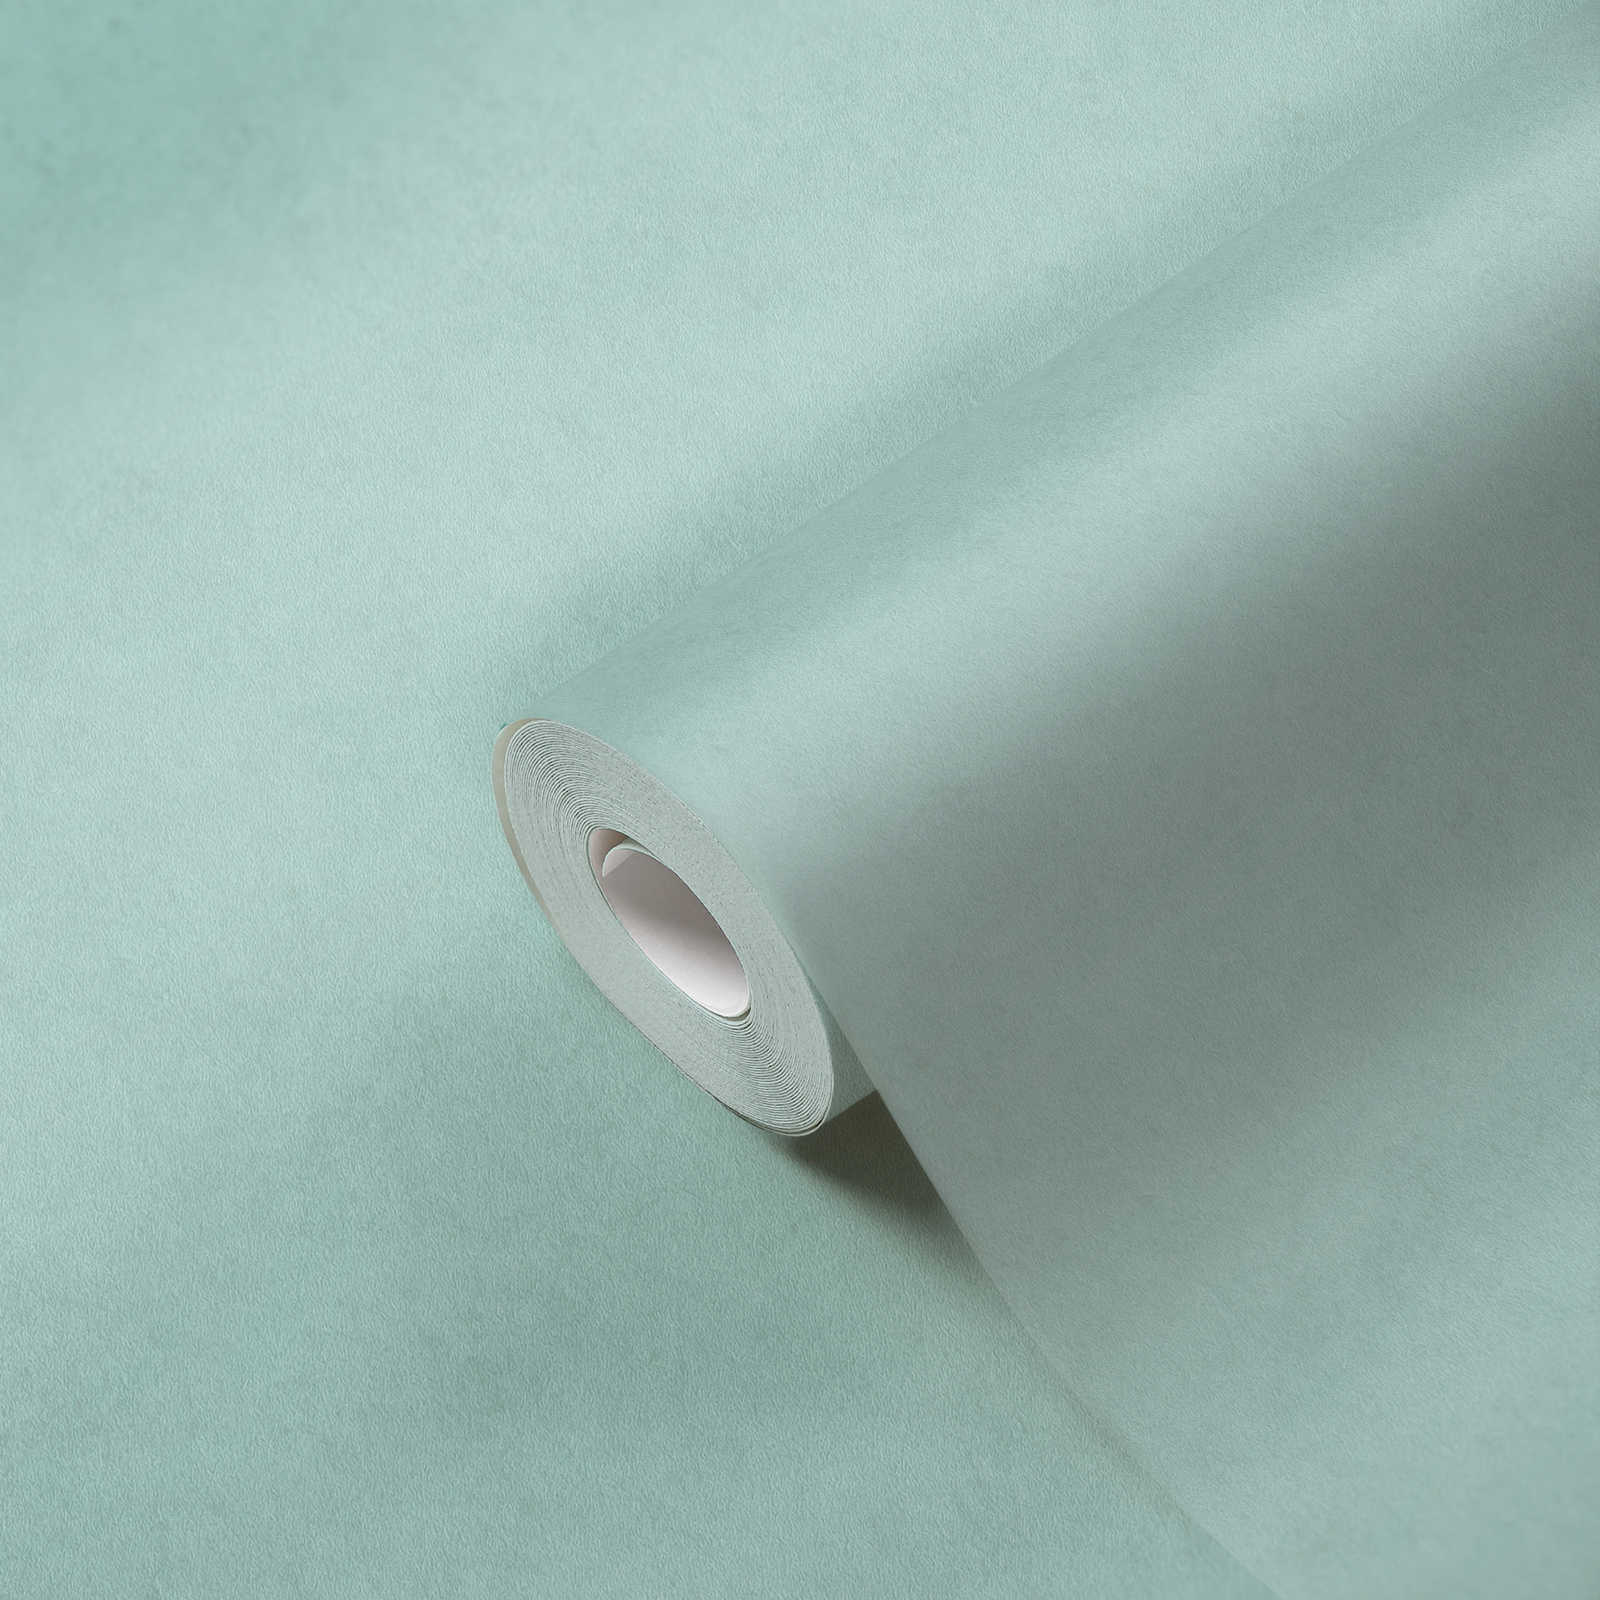             Plain non-woven wallpaper - turquoise
        